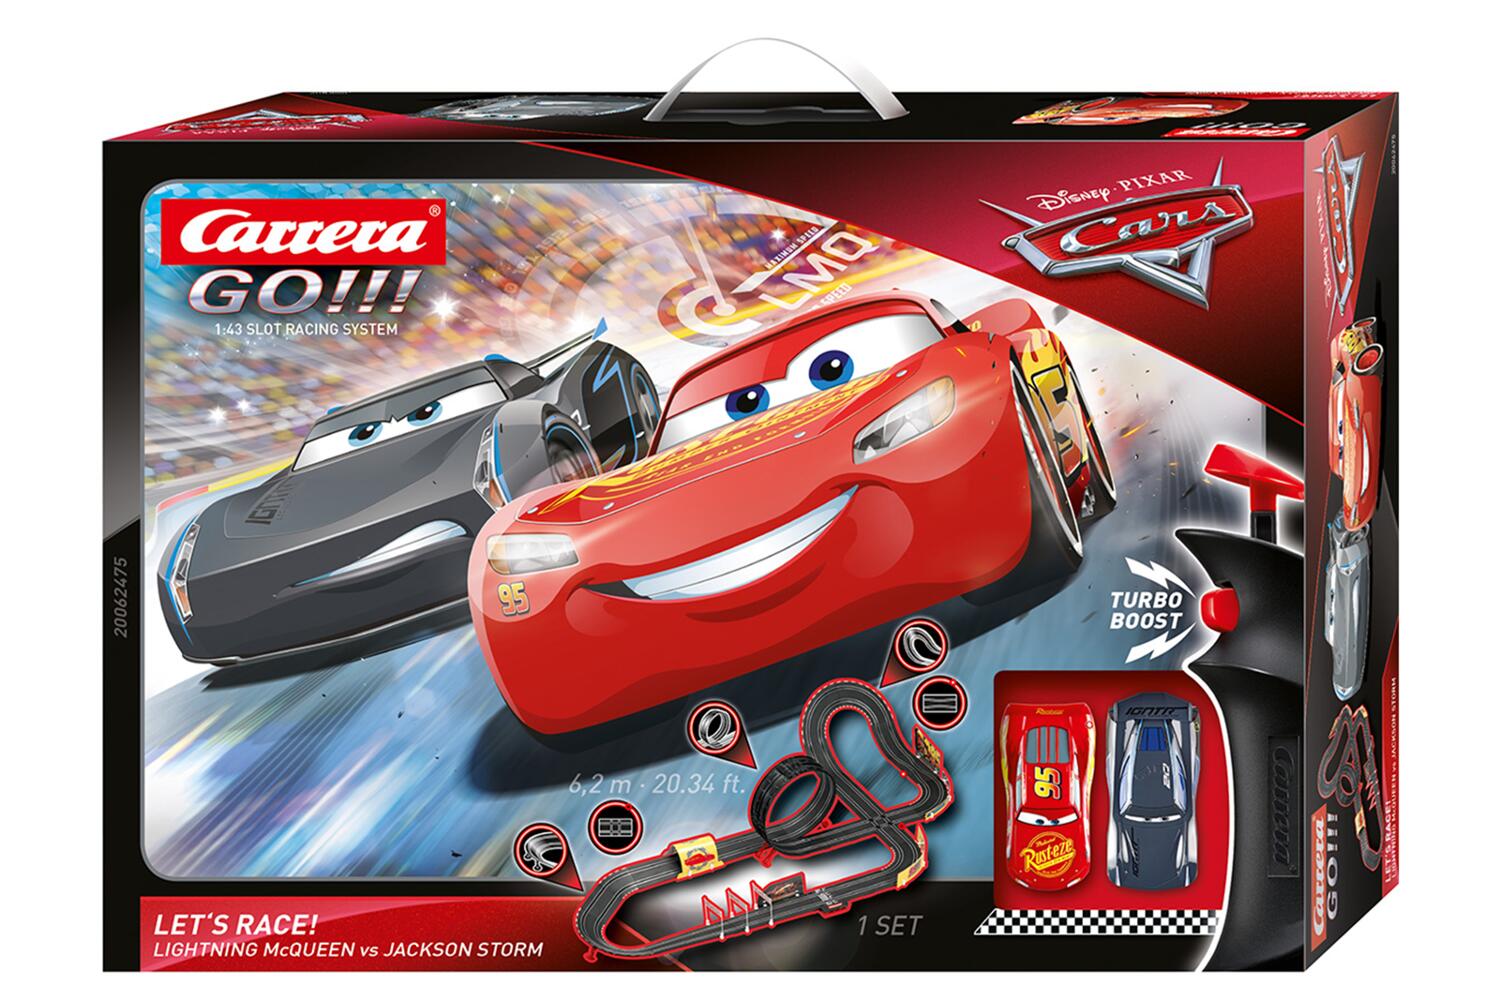 Circuit de voiture Carrera Disney·Pixar Cars - Course d'amis